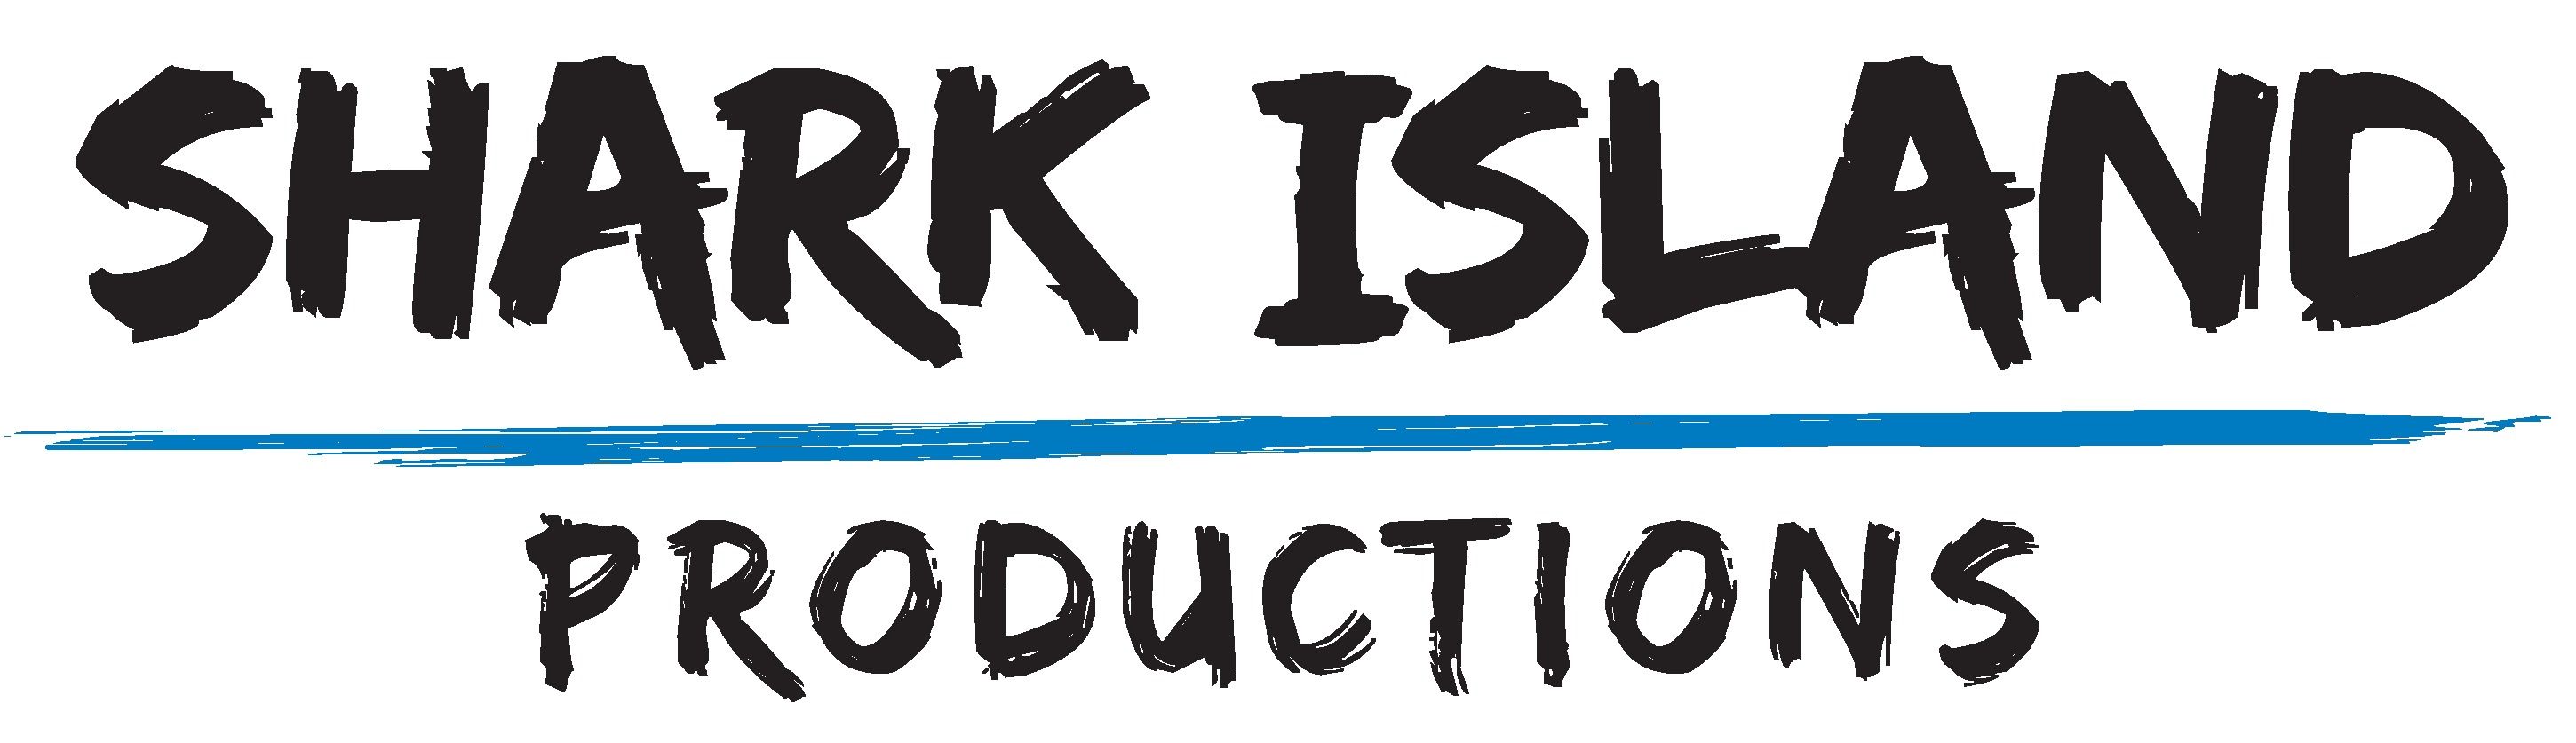 Shark Island Productions Pty Ltd, Australia